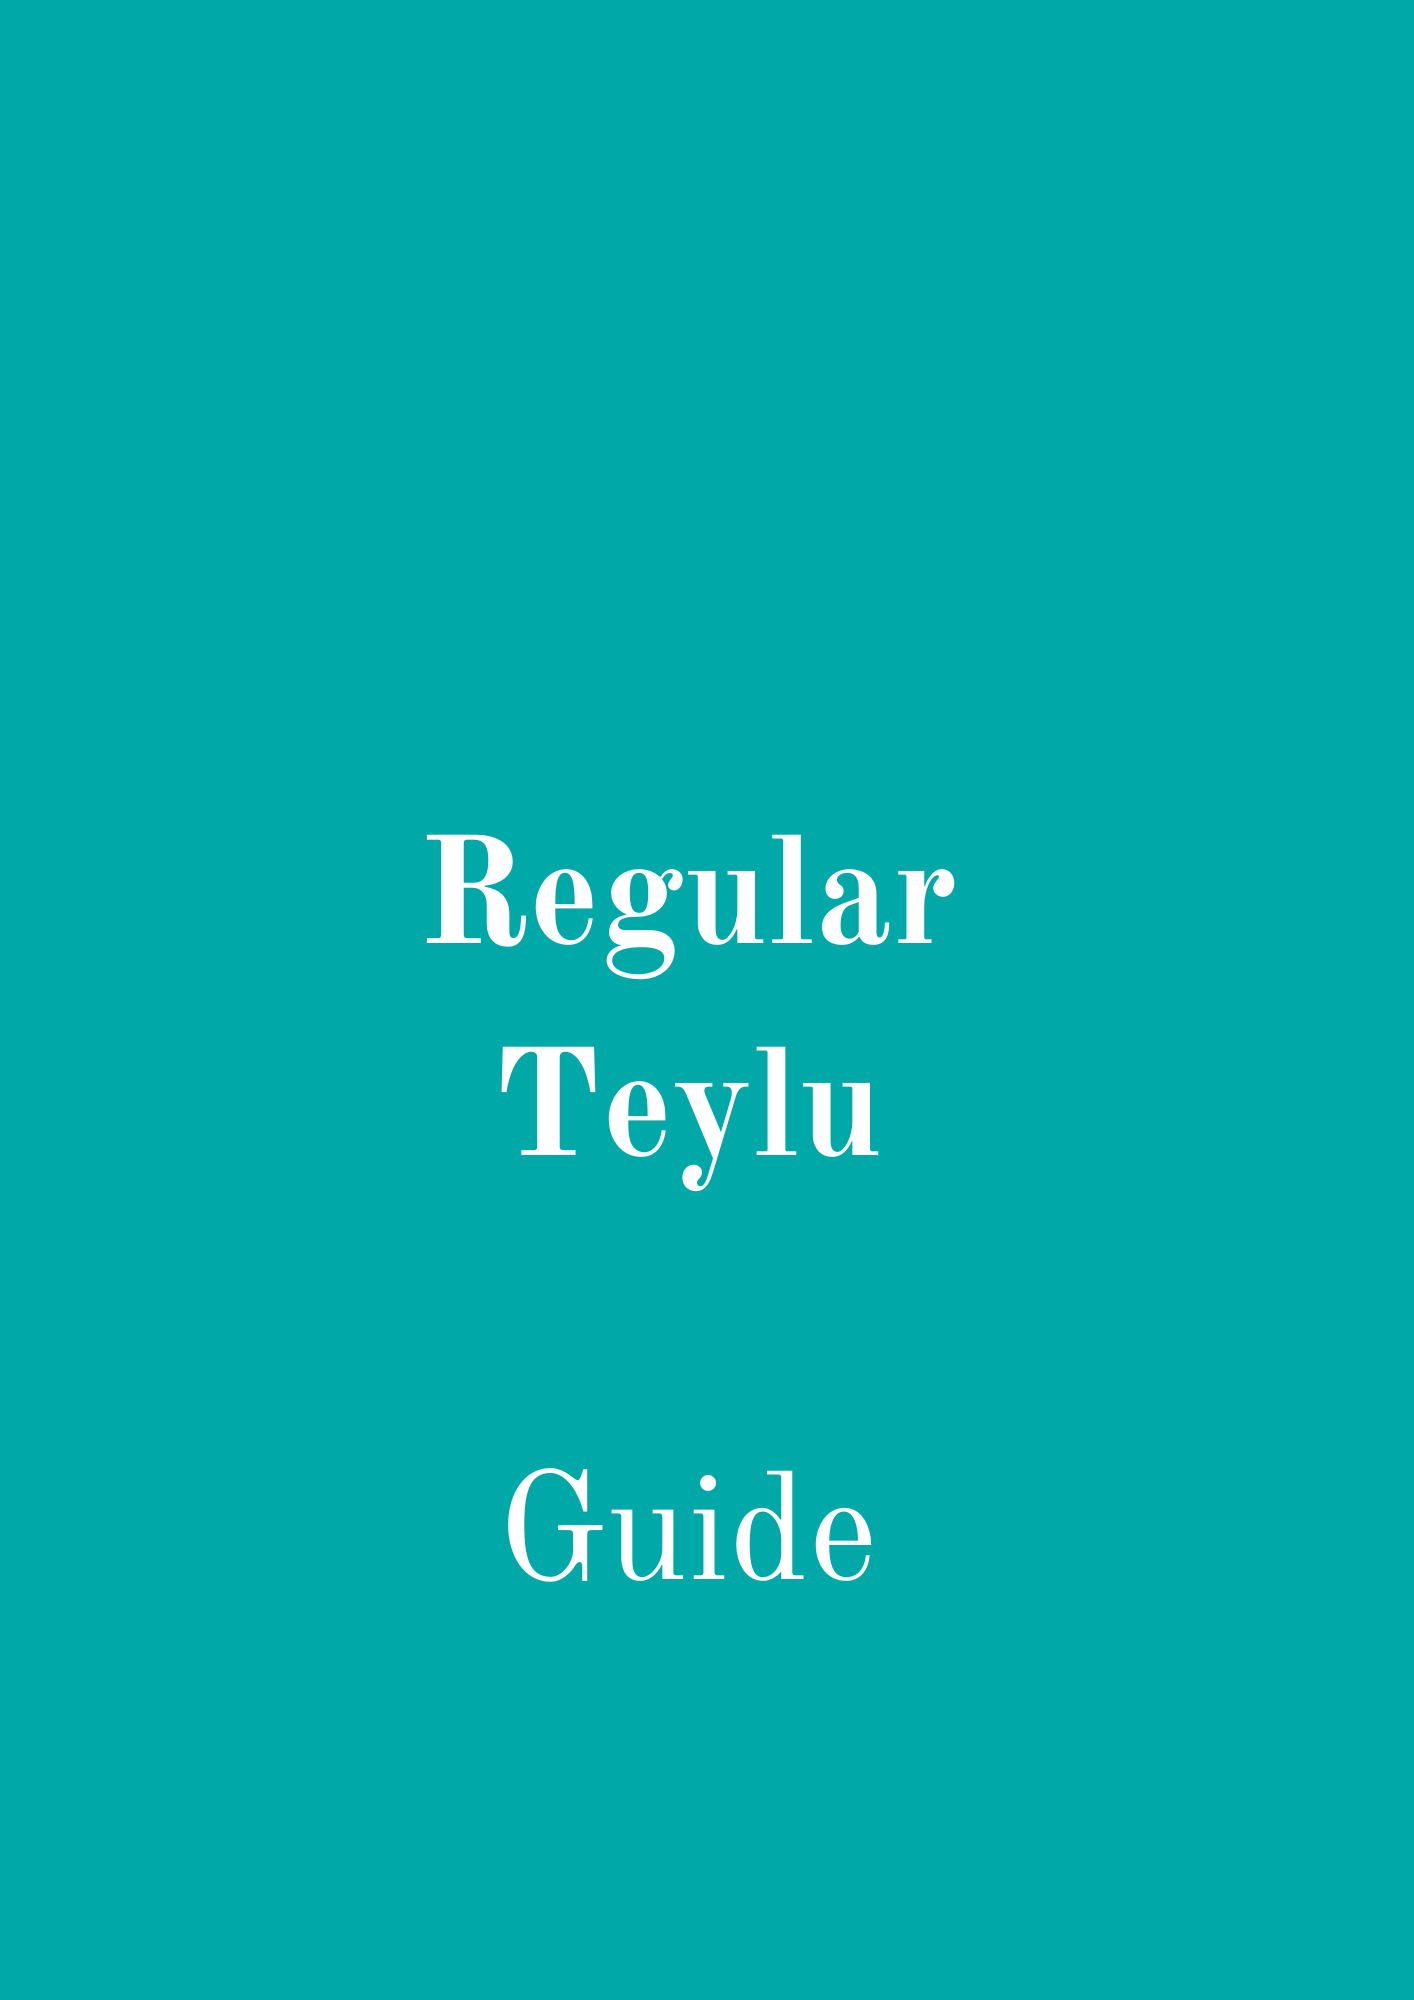 Regular Teylu - Guide